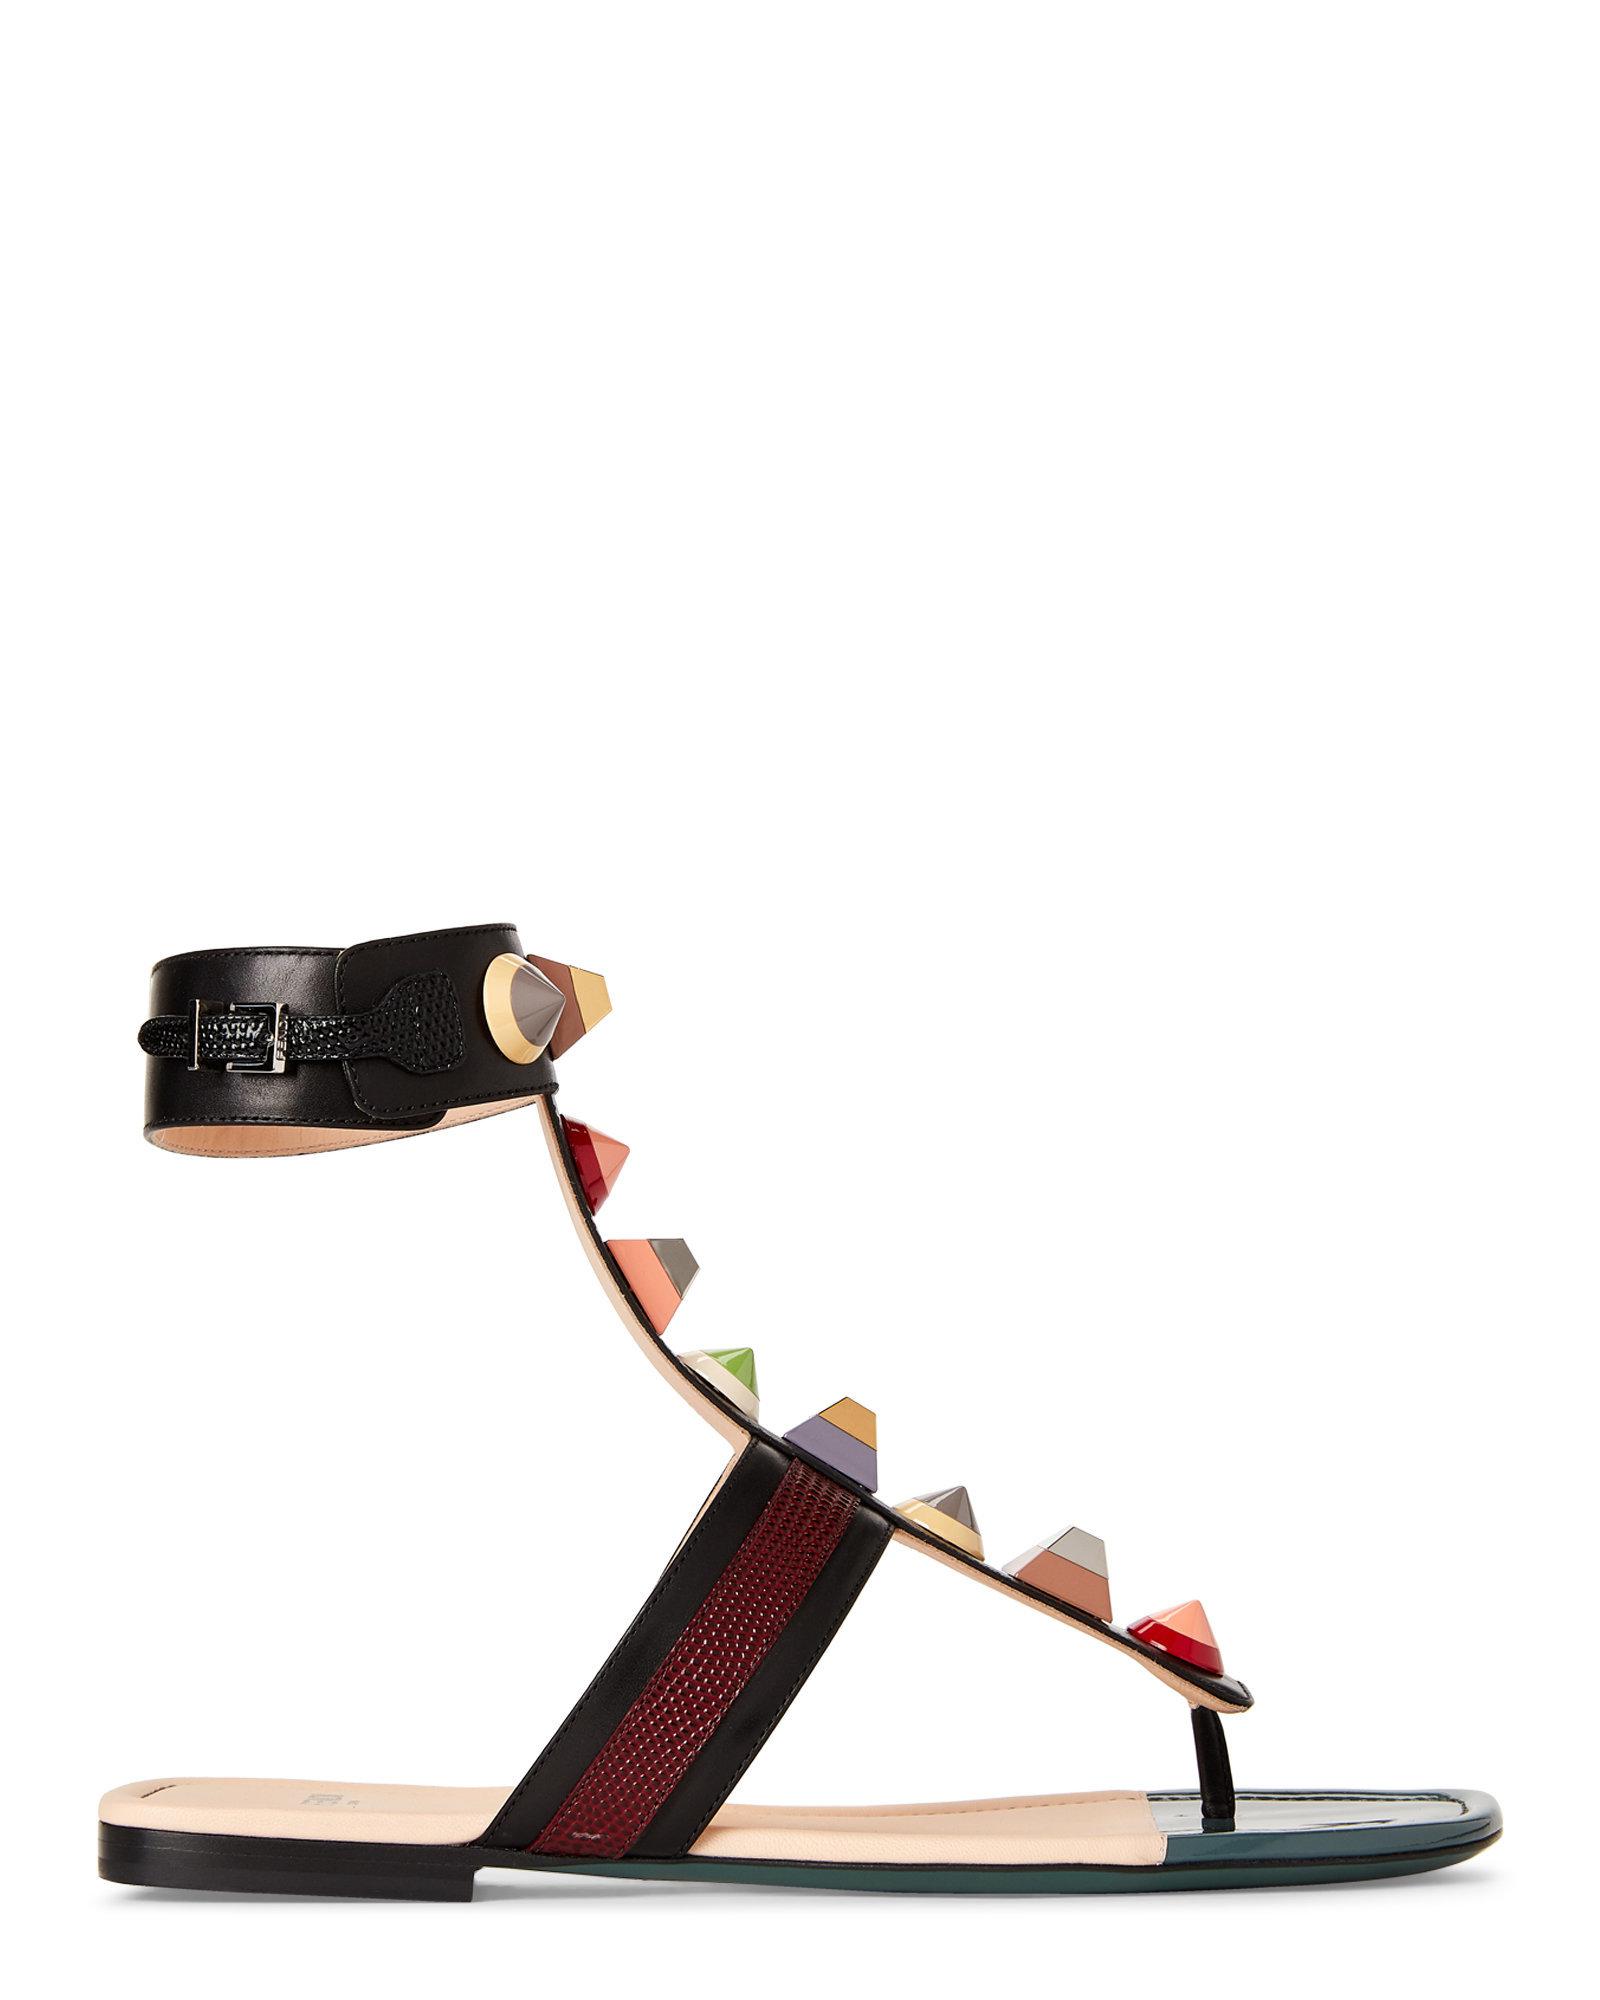 Fendi Rainbow Studded Leather Flat Sandals in Black - Lyst